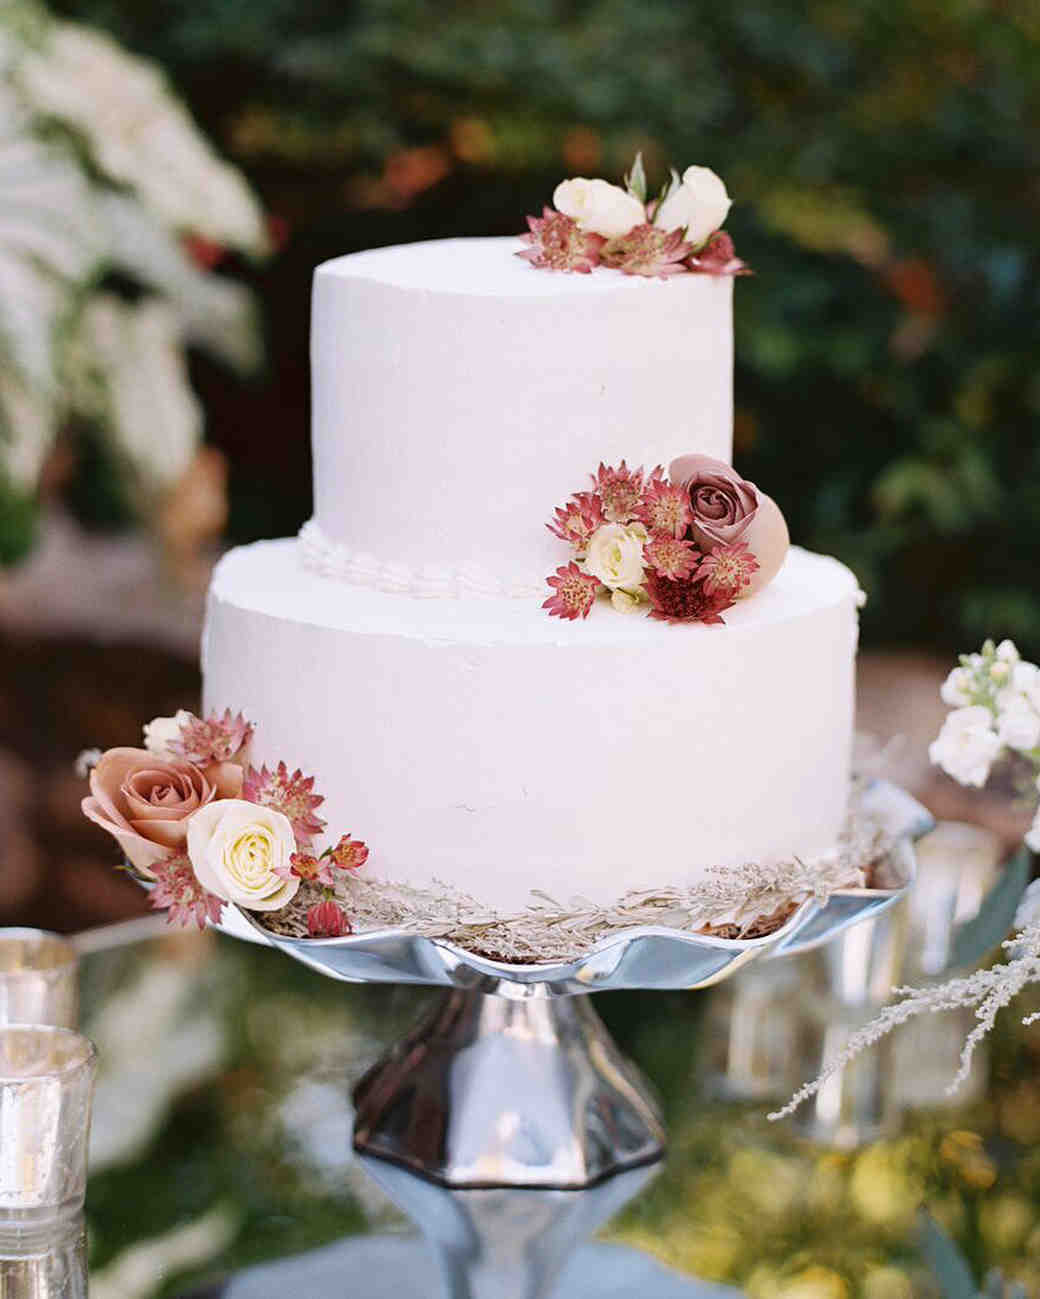 Wedding Cakes For Fall
 Fall Wedding Cakes